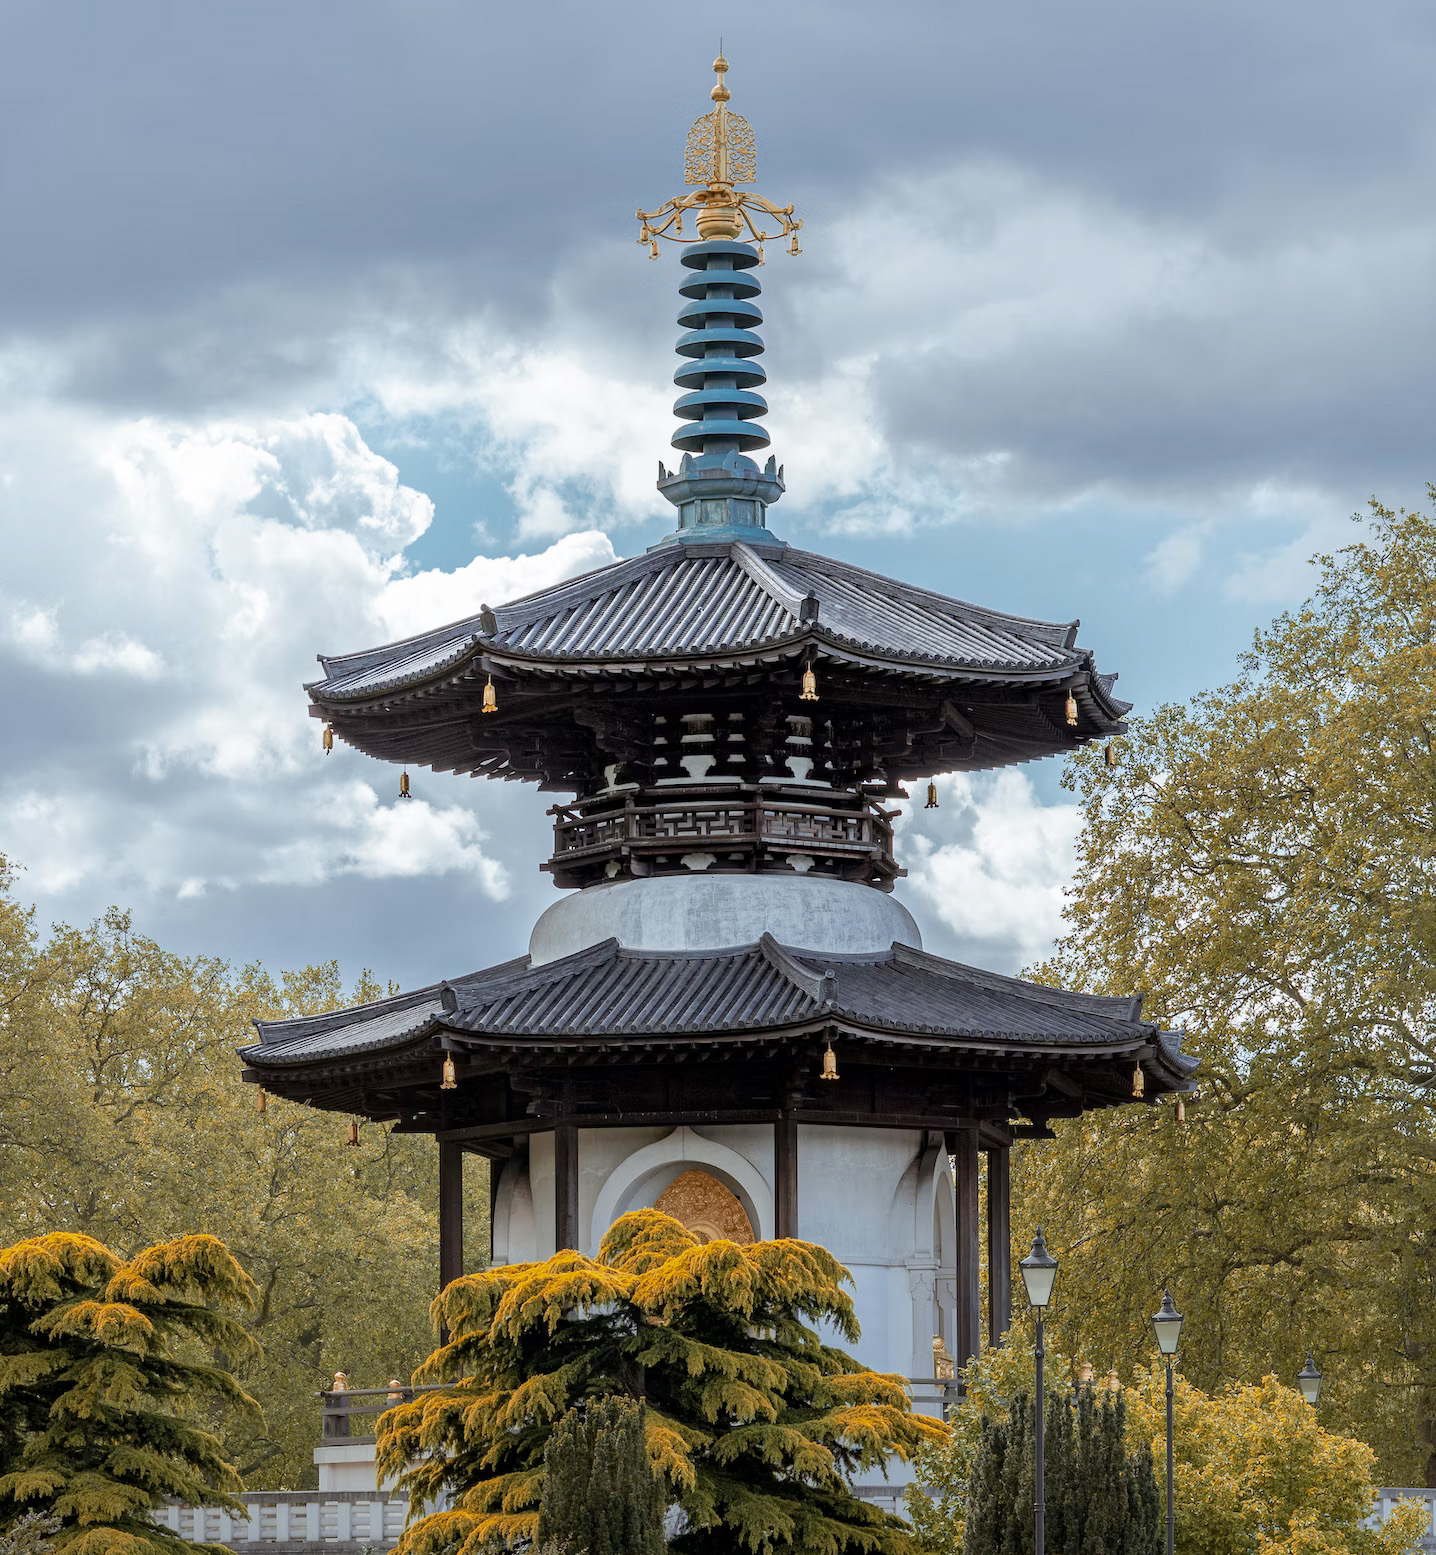 Battersea Park Peace Pagoda